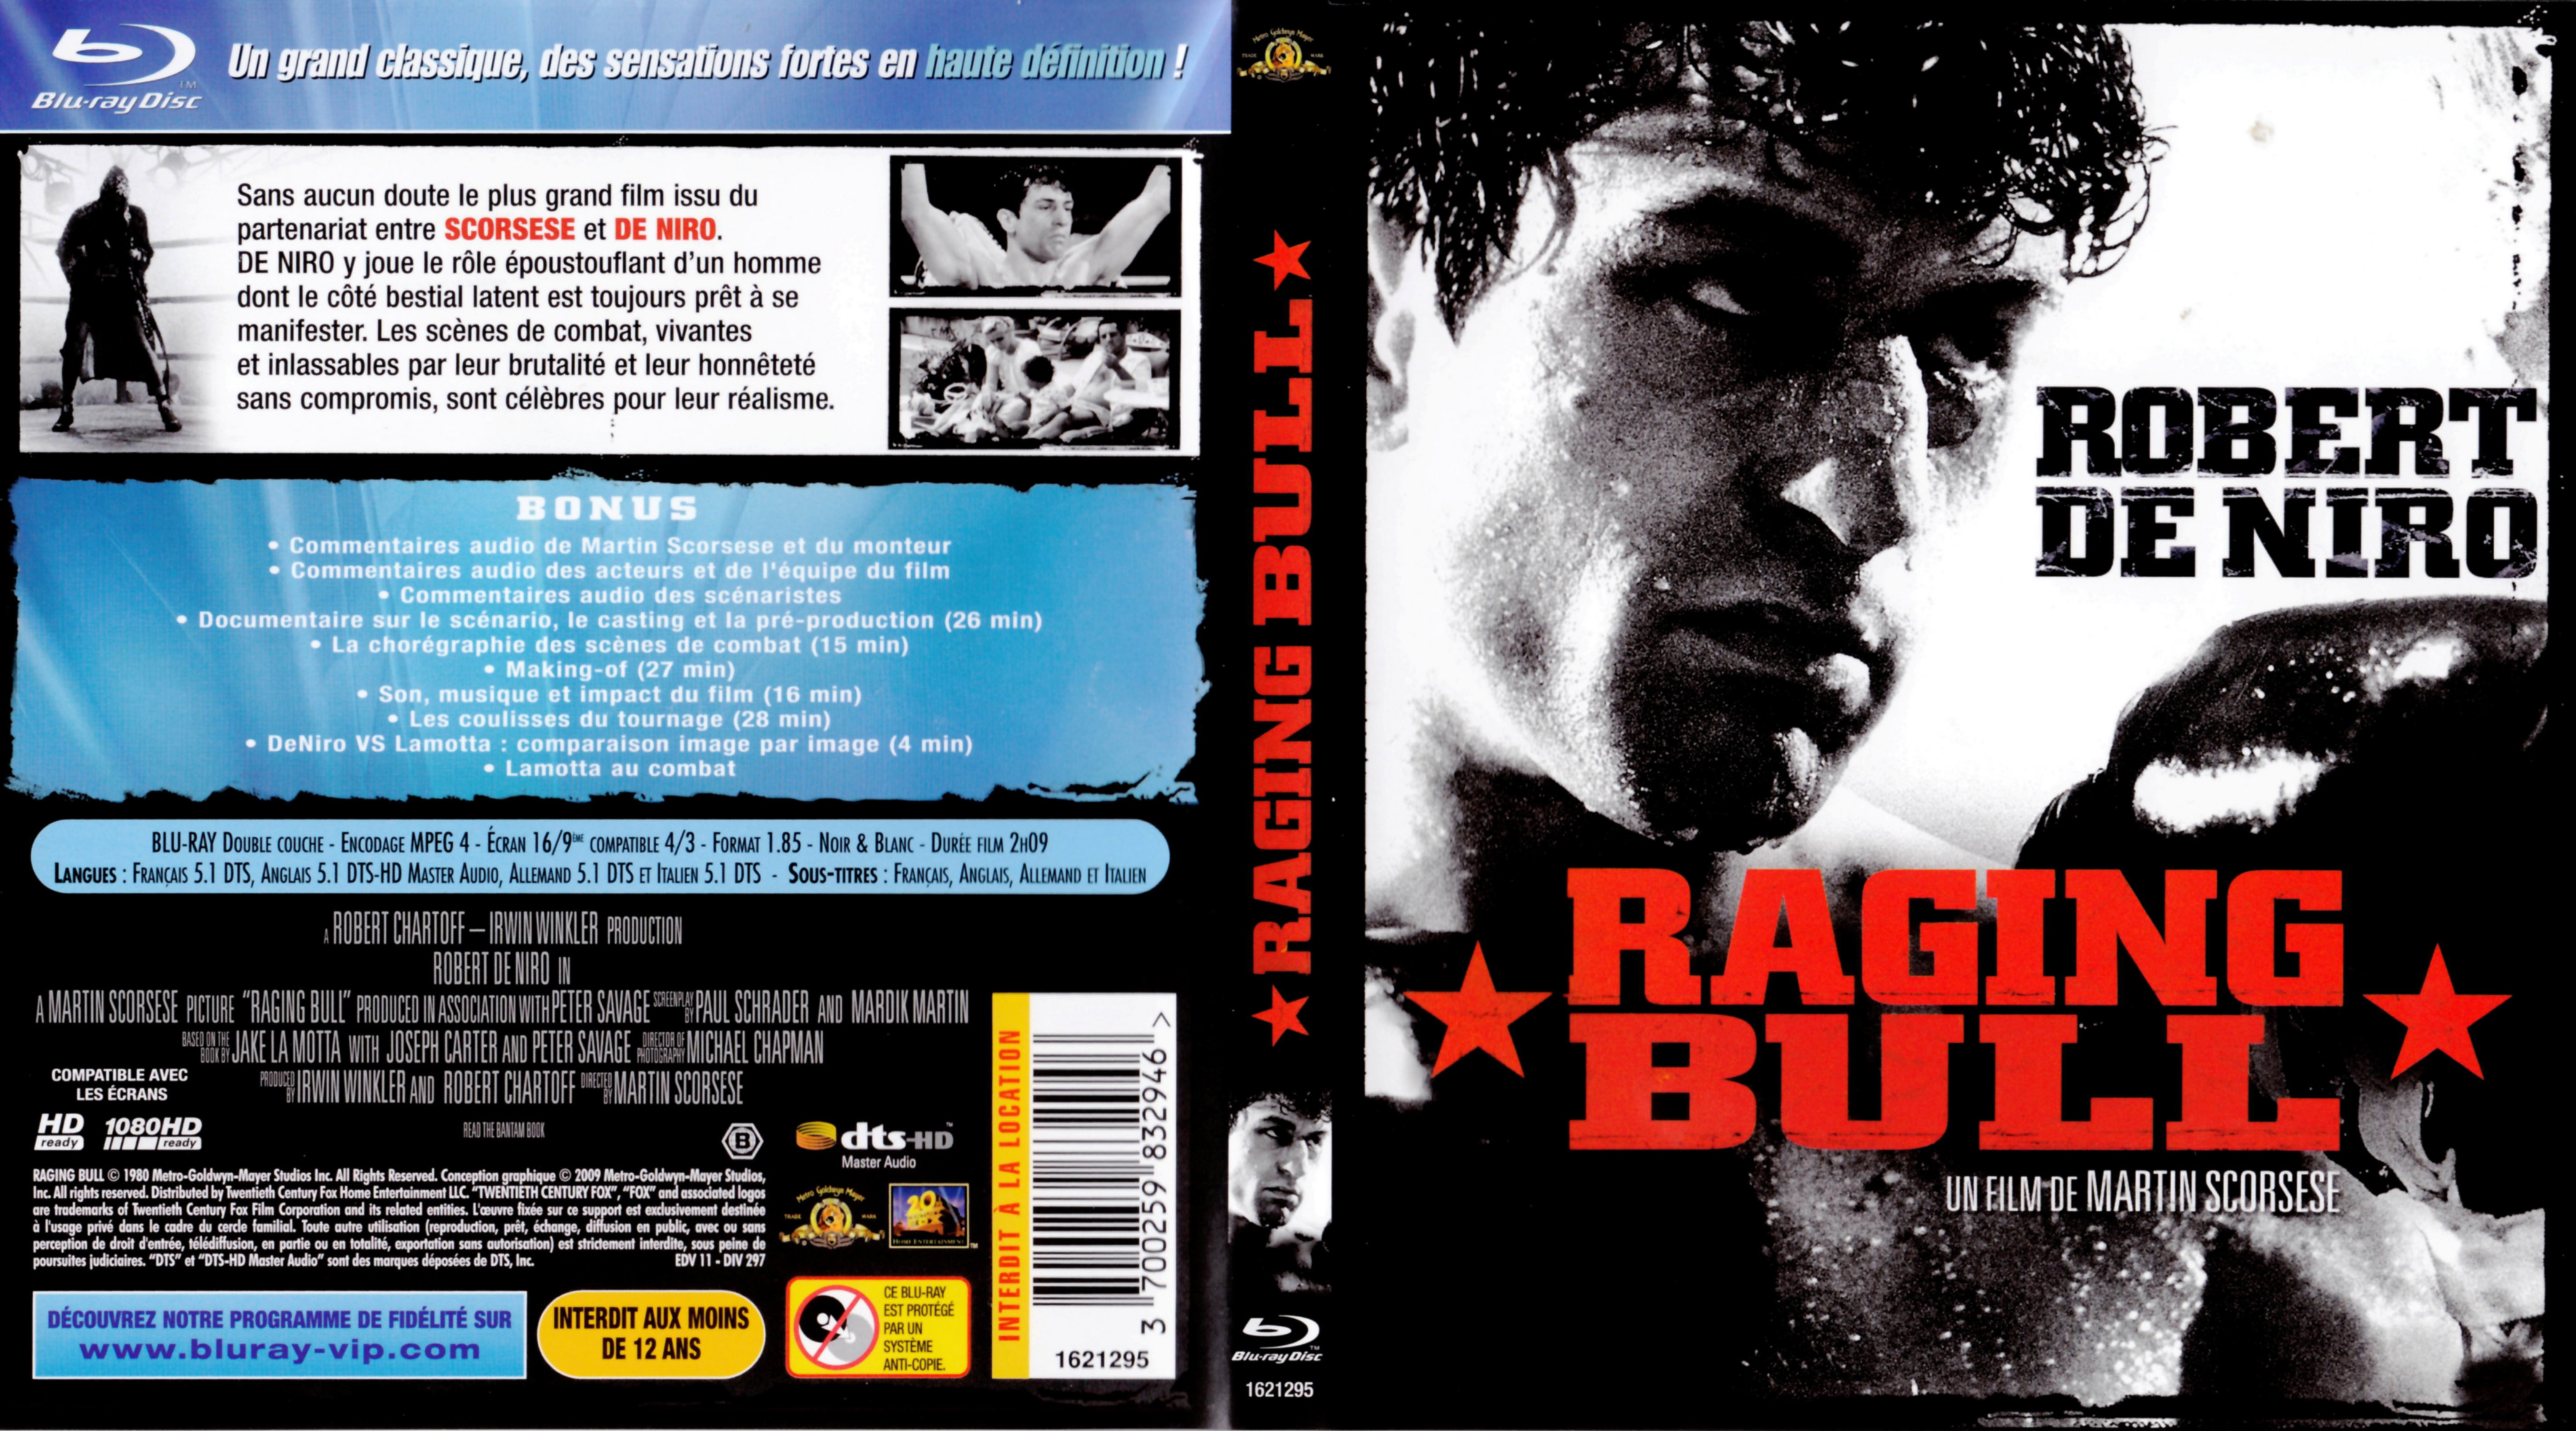 Jaquette DVD Raging bull (BLU-RAY)